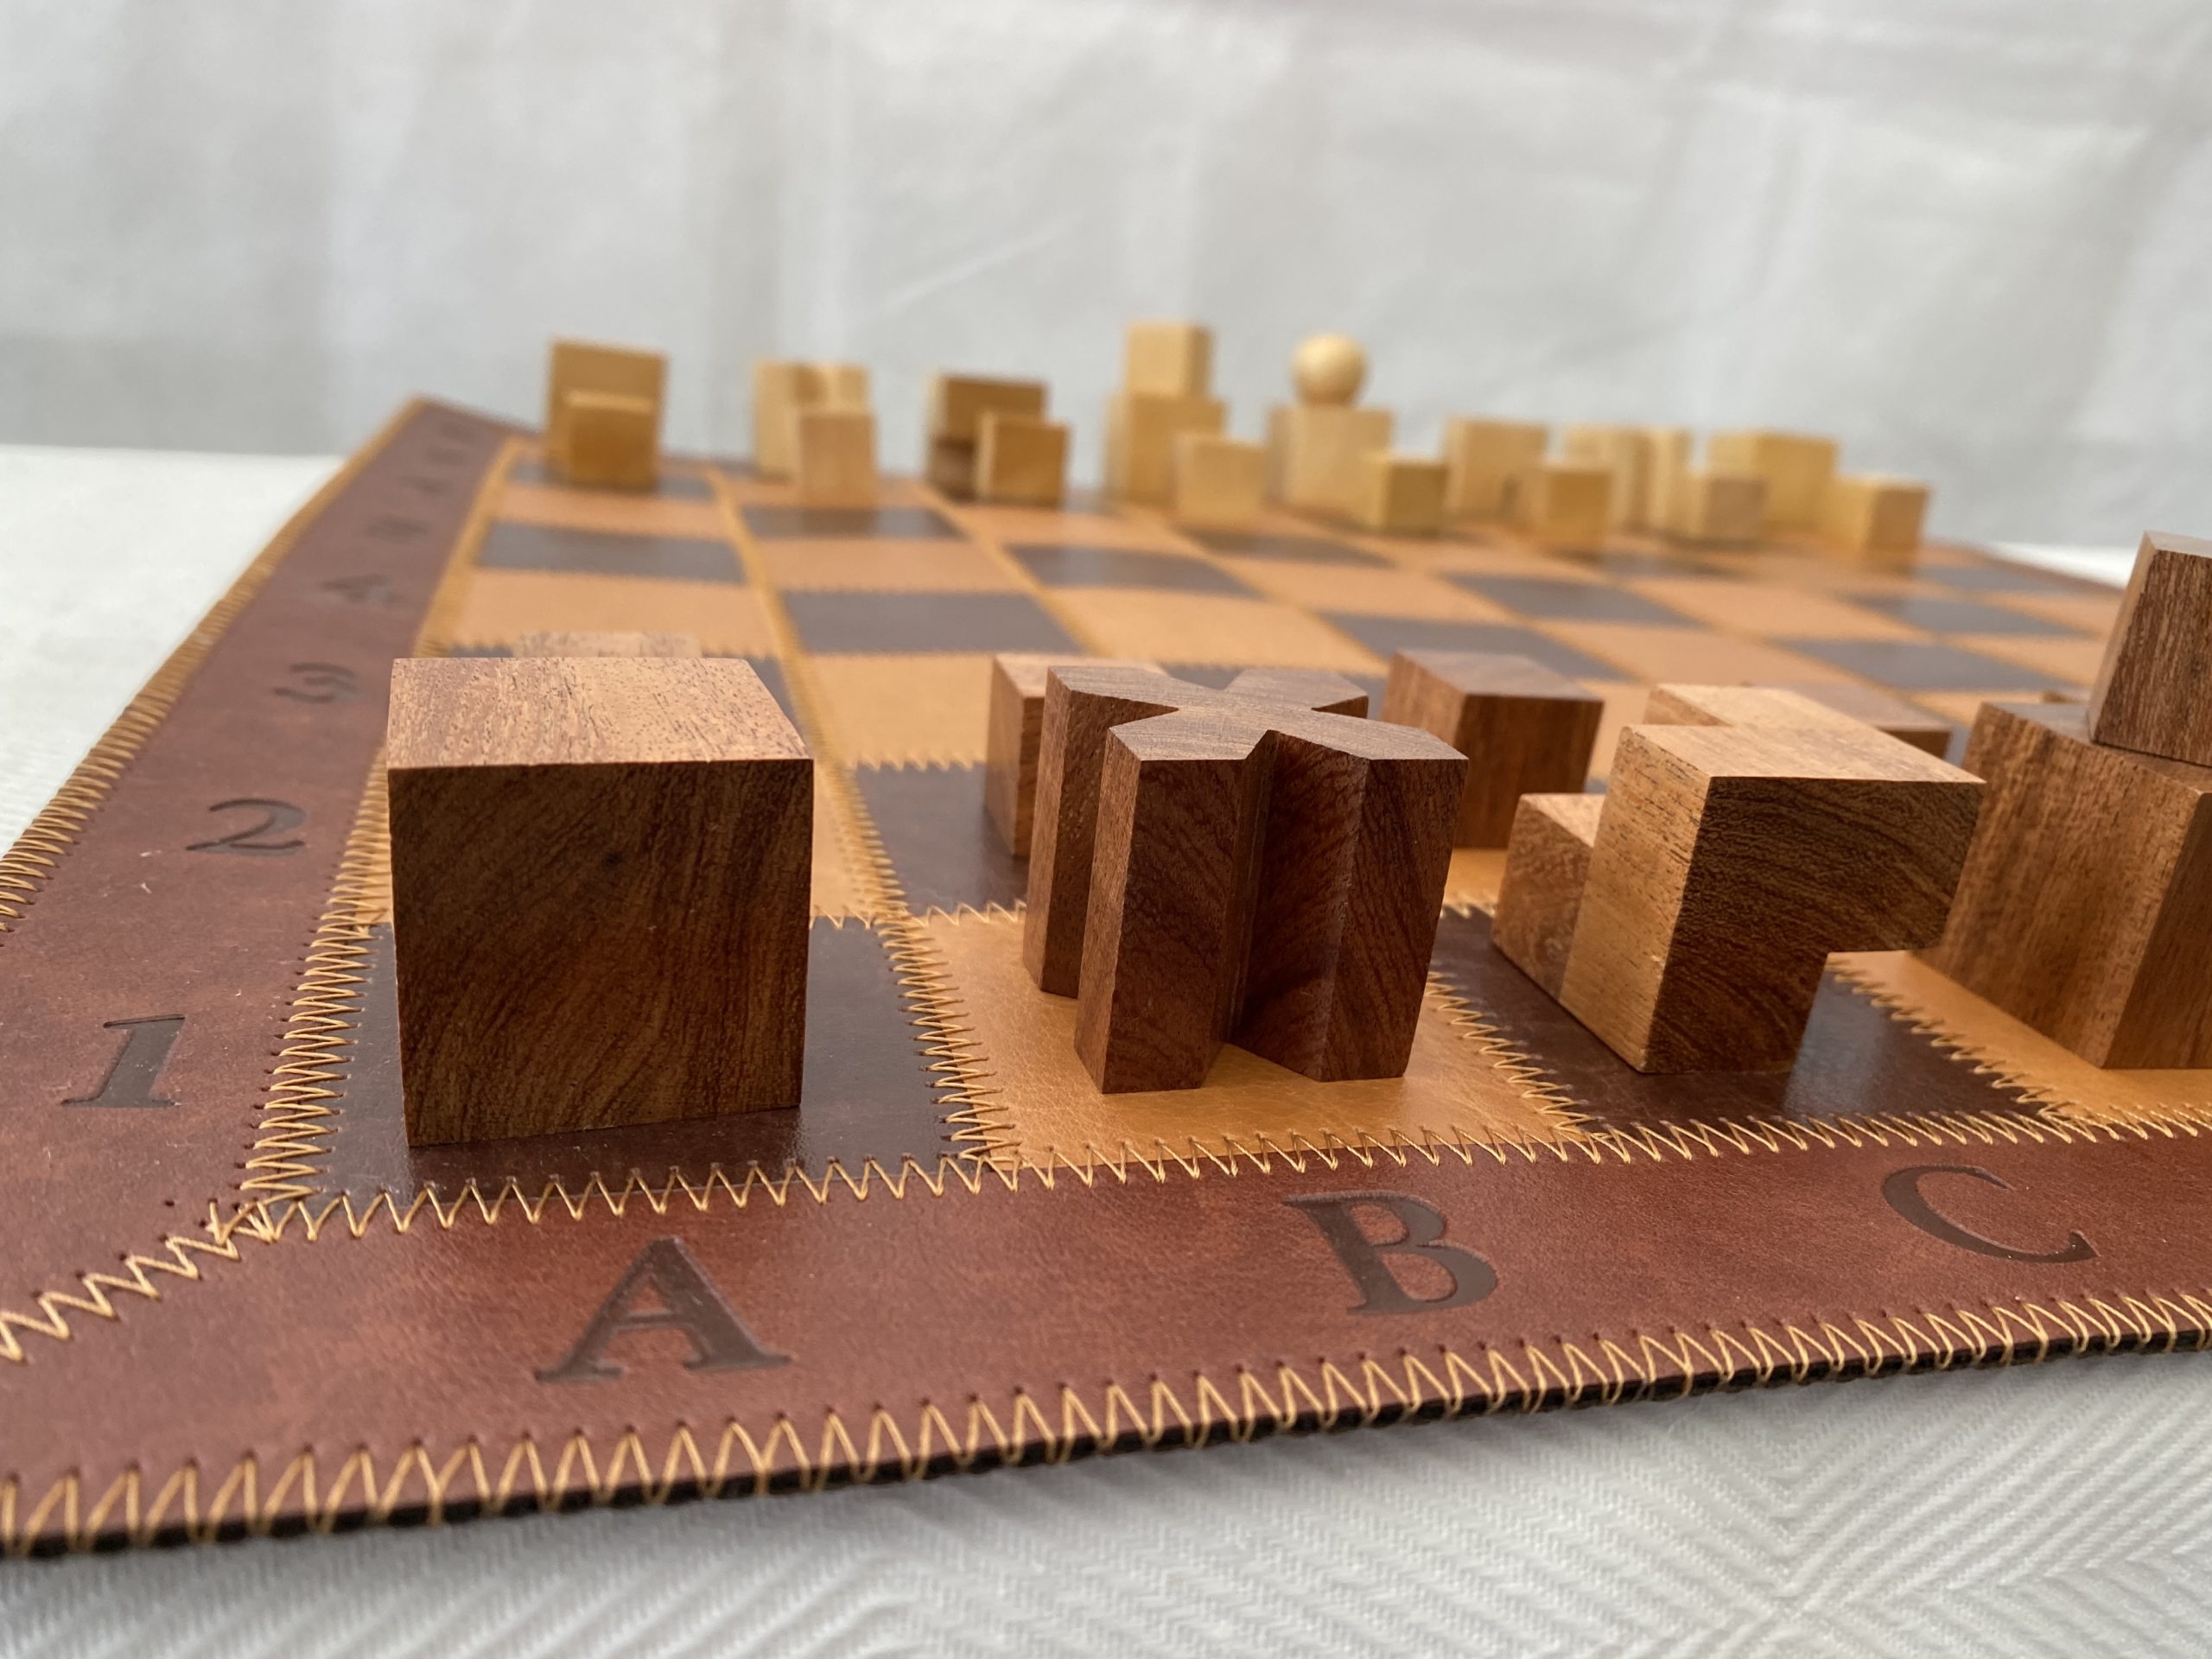 The Bauhaus Chess Board – Chess House